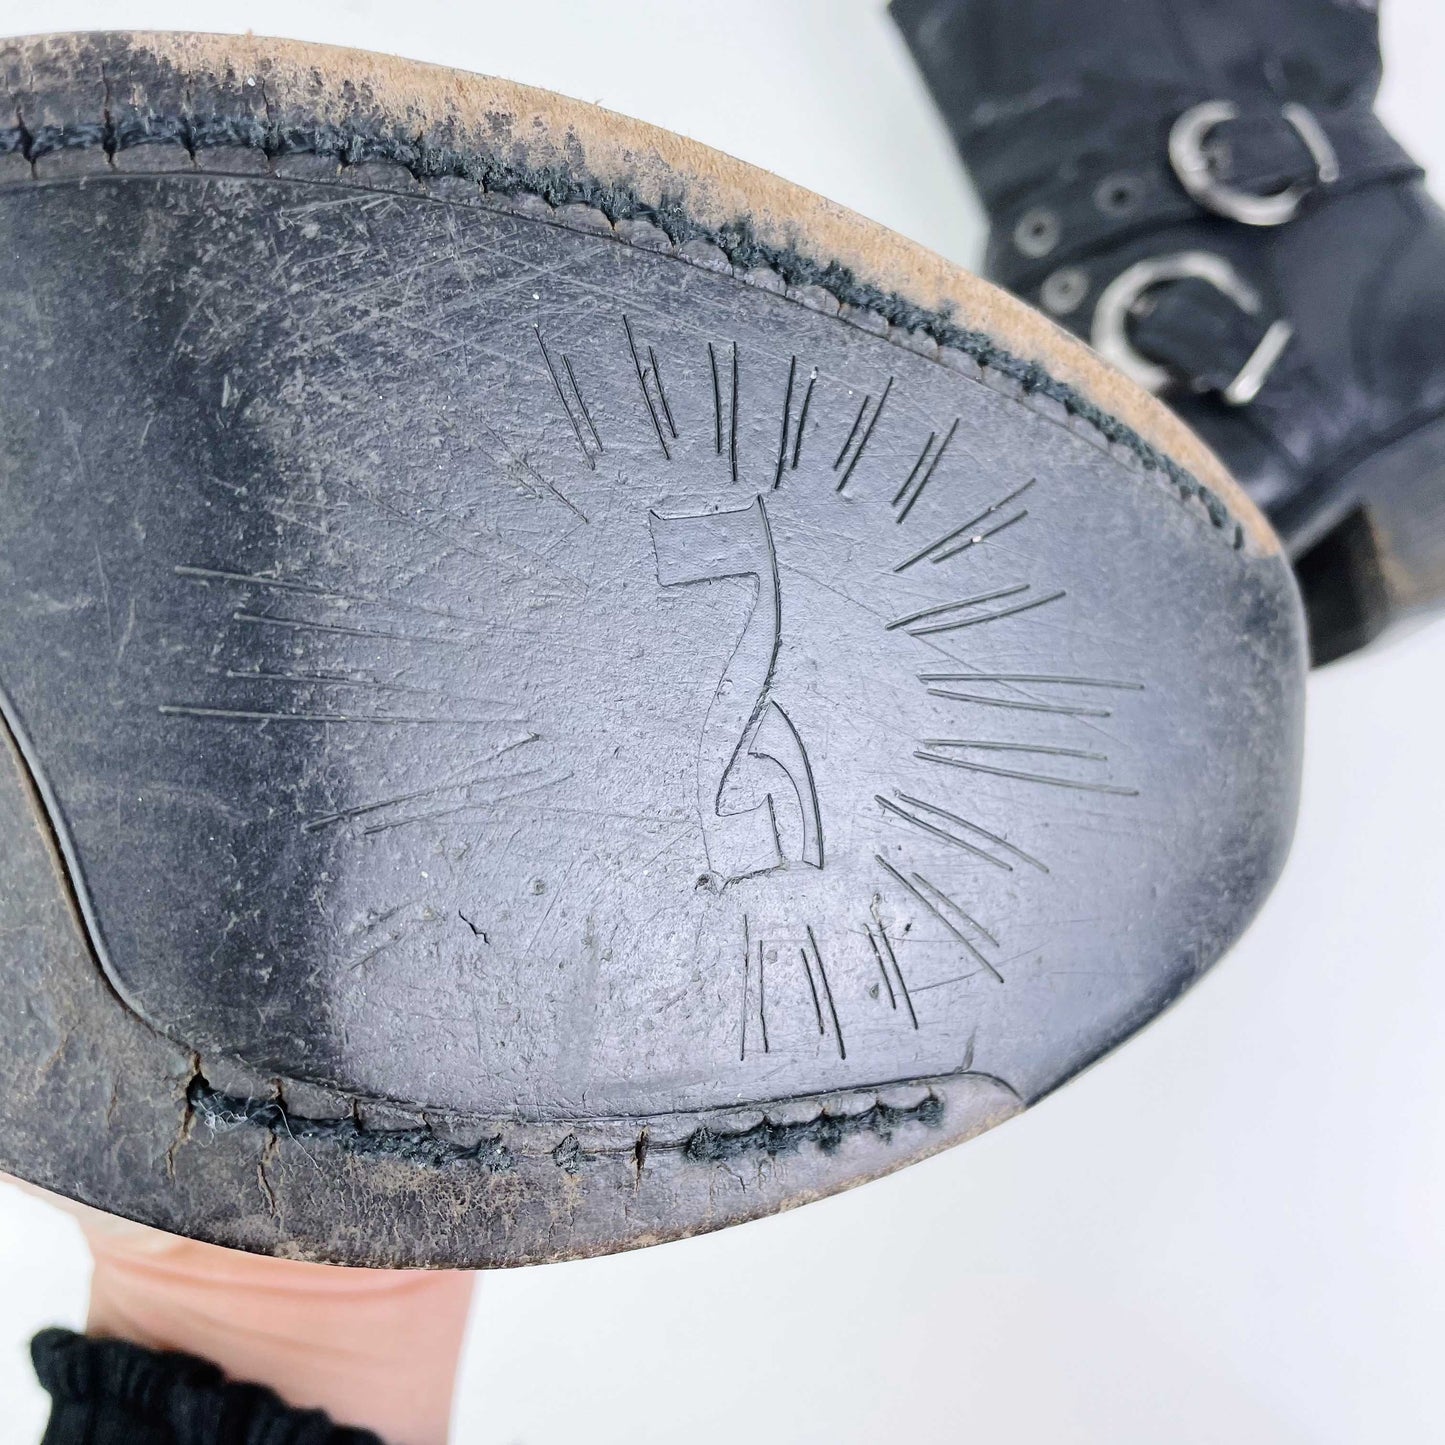 nero giardini black leather western boots - size 39